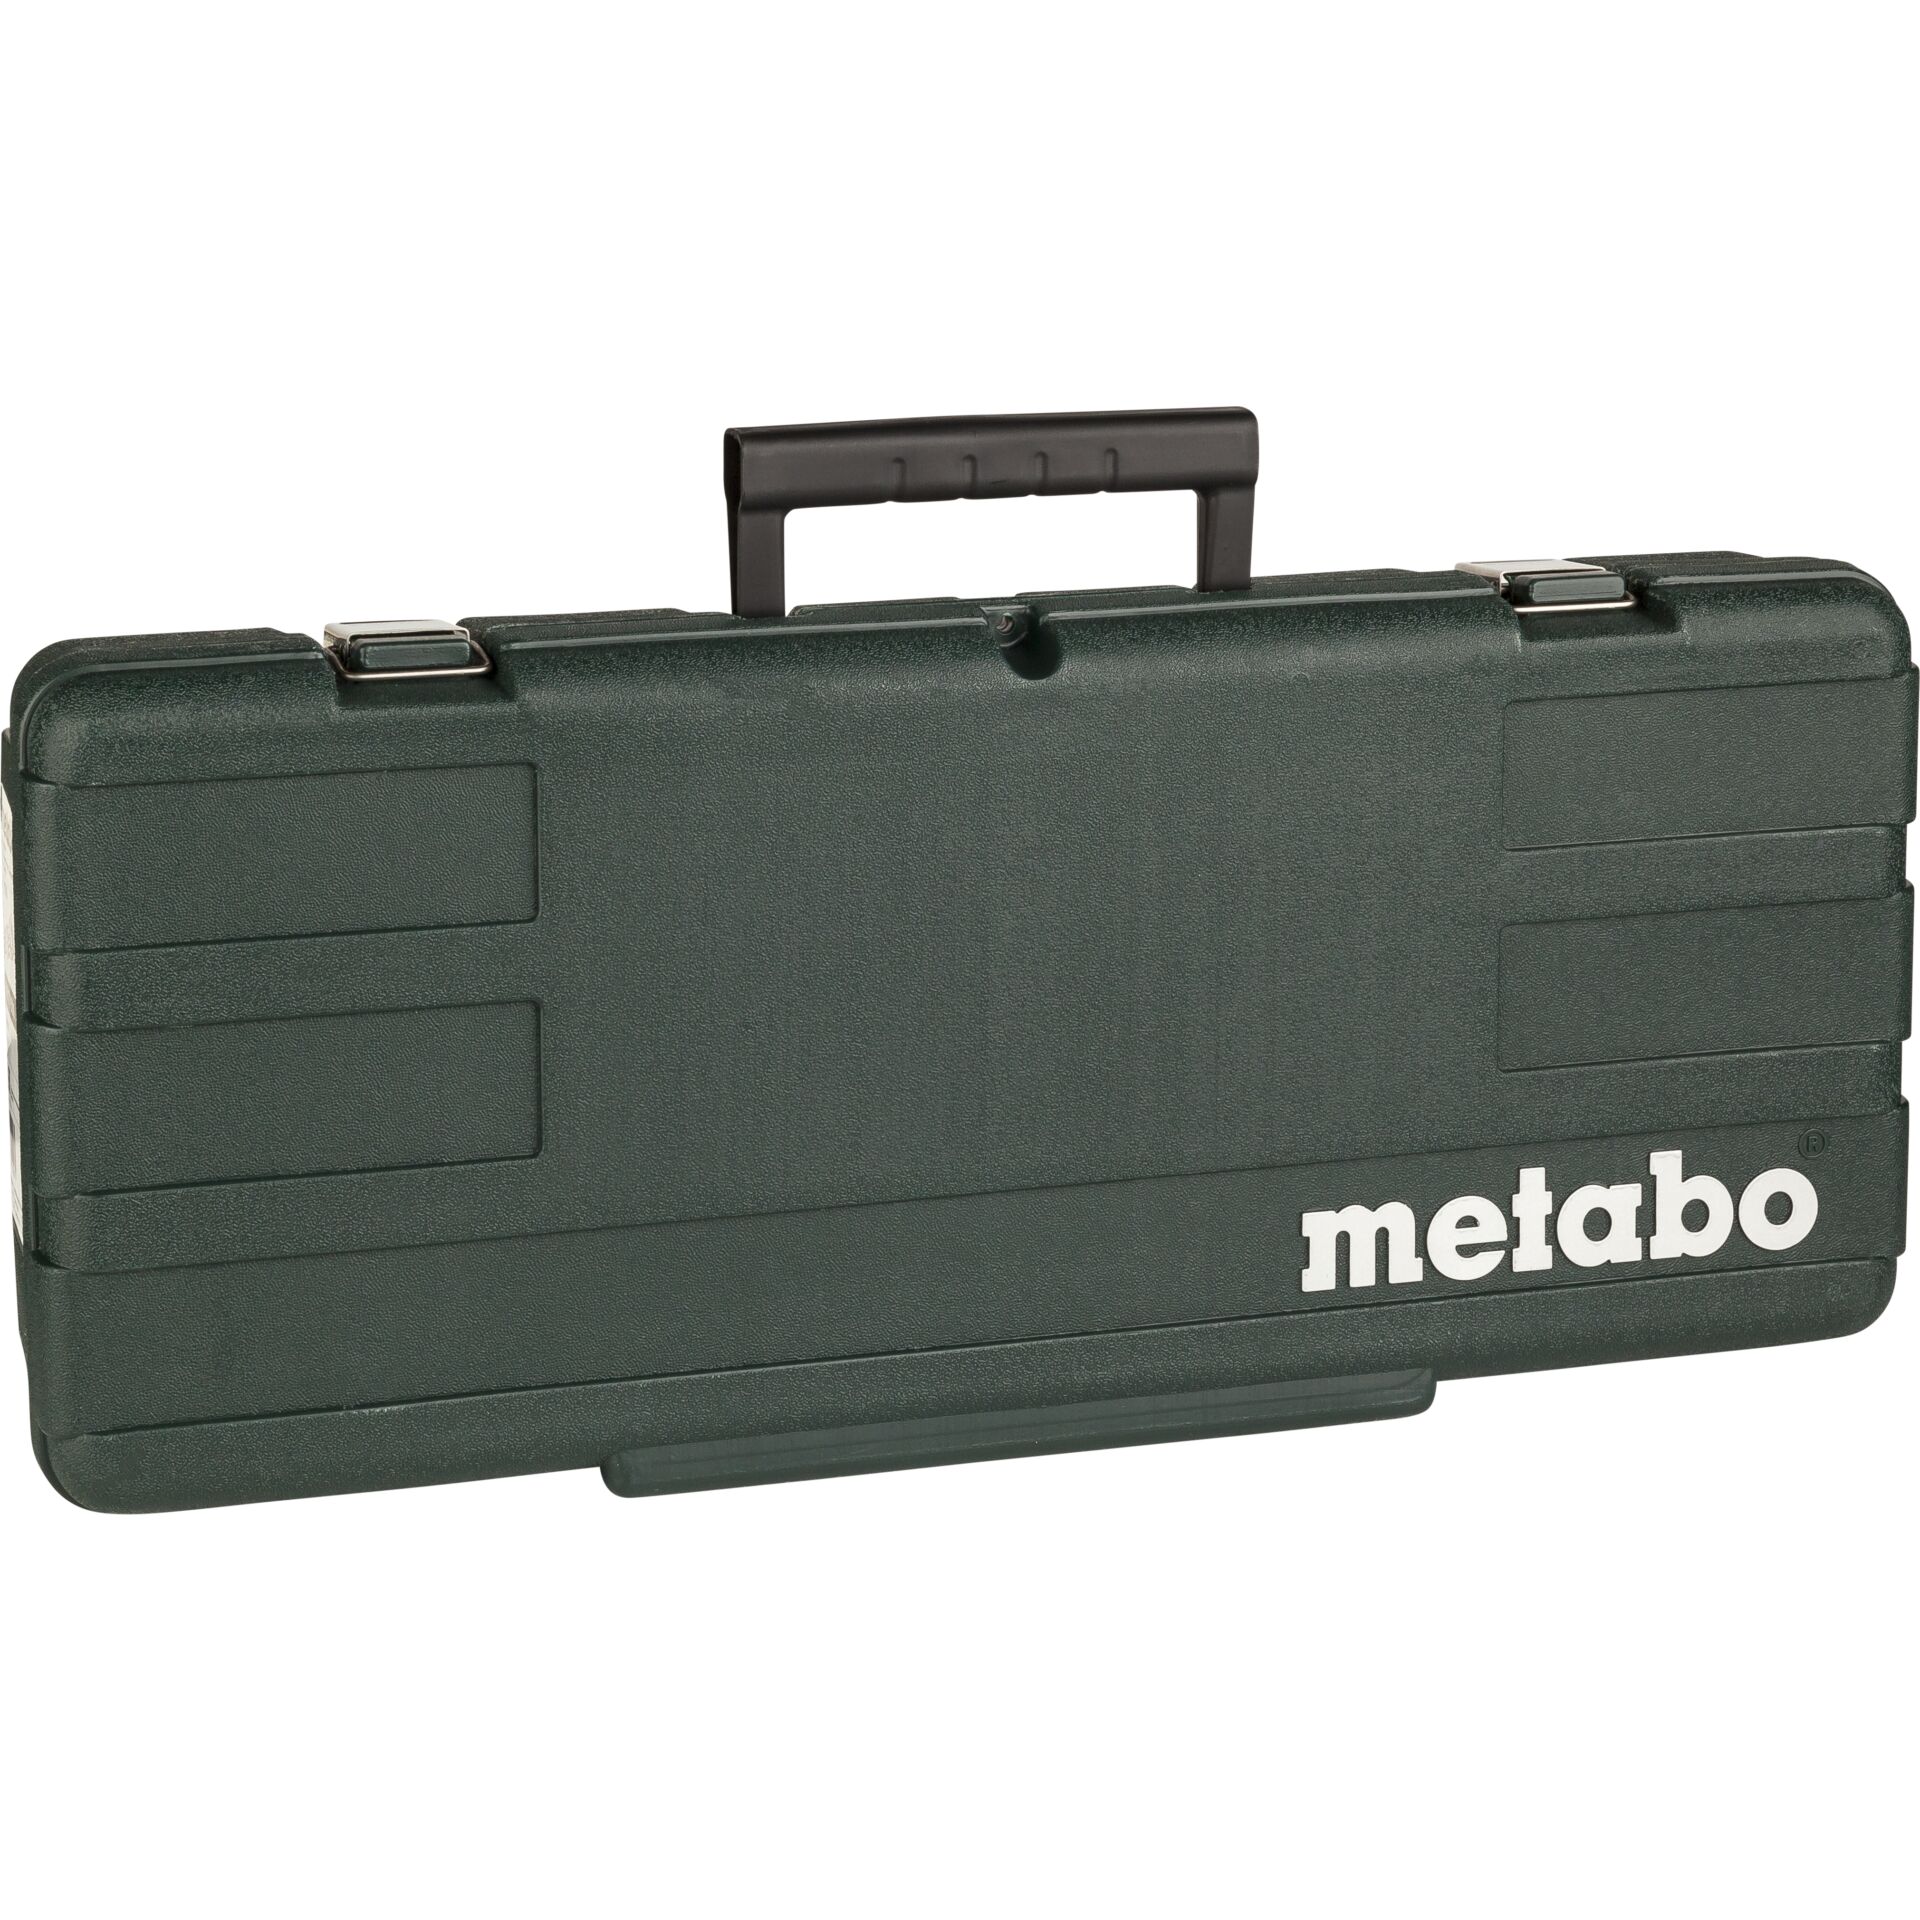 Säbelsäge Hardware/Electronic Metabo 28 mm Hub-Länge 1100 1100 W (606177500) -Metabo -SSE